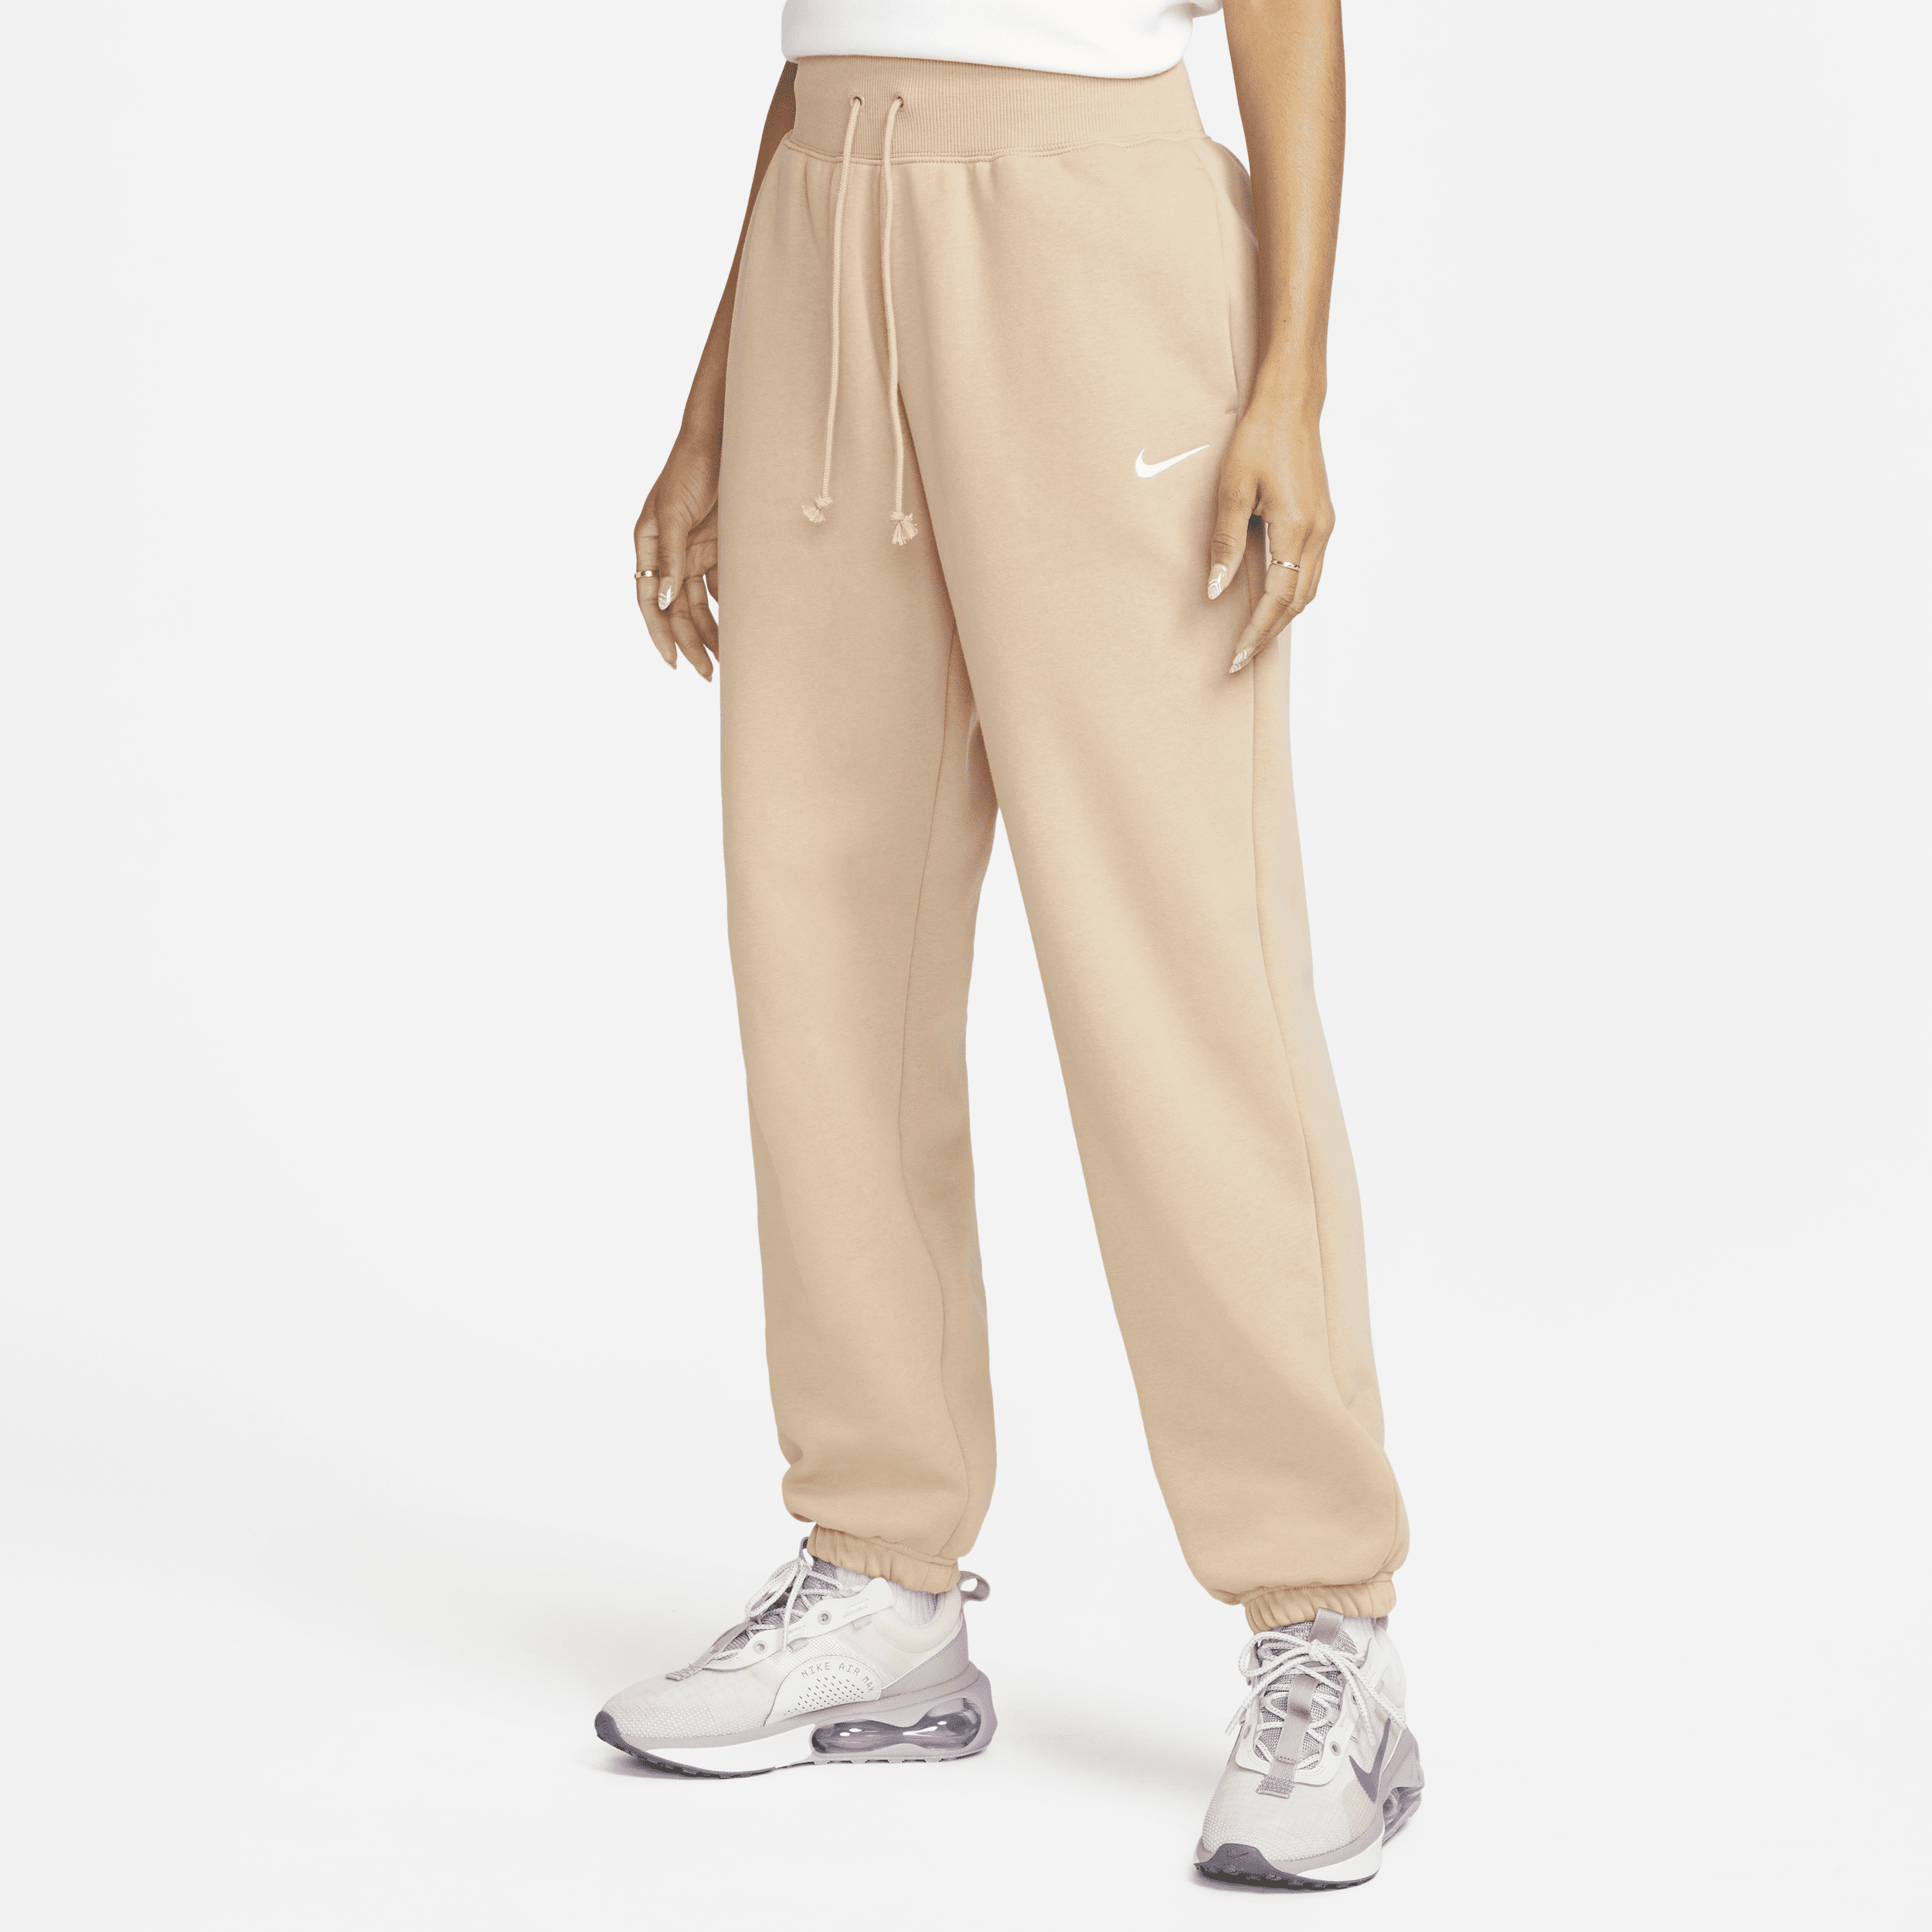 Pantaloni tuta oversize a vita alta Nike Sportswear Phoenix Fleece – Donna - Marrone